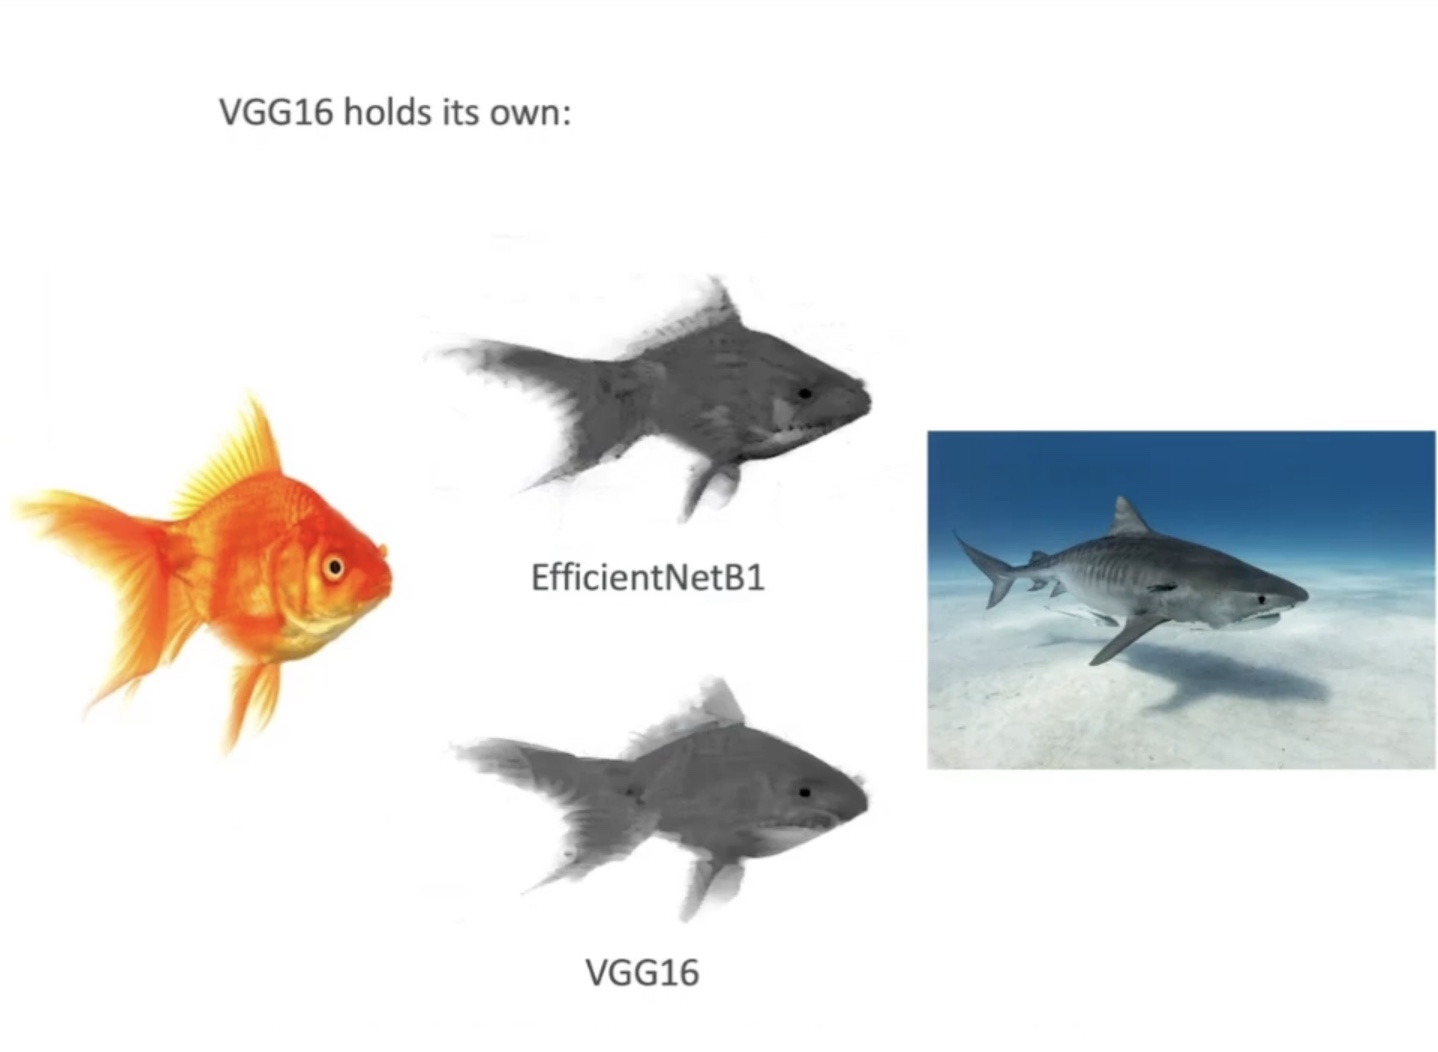 EfficientNetB1 and VGG16